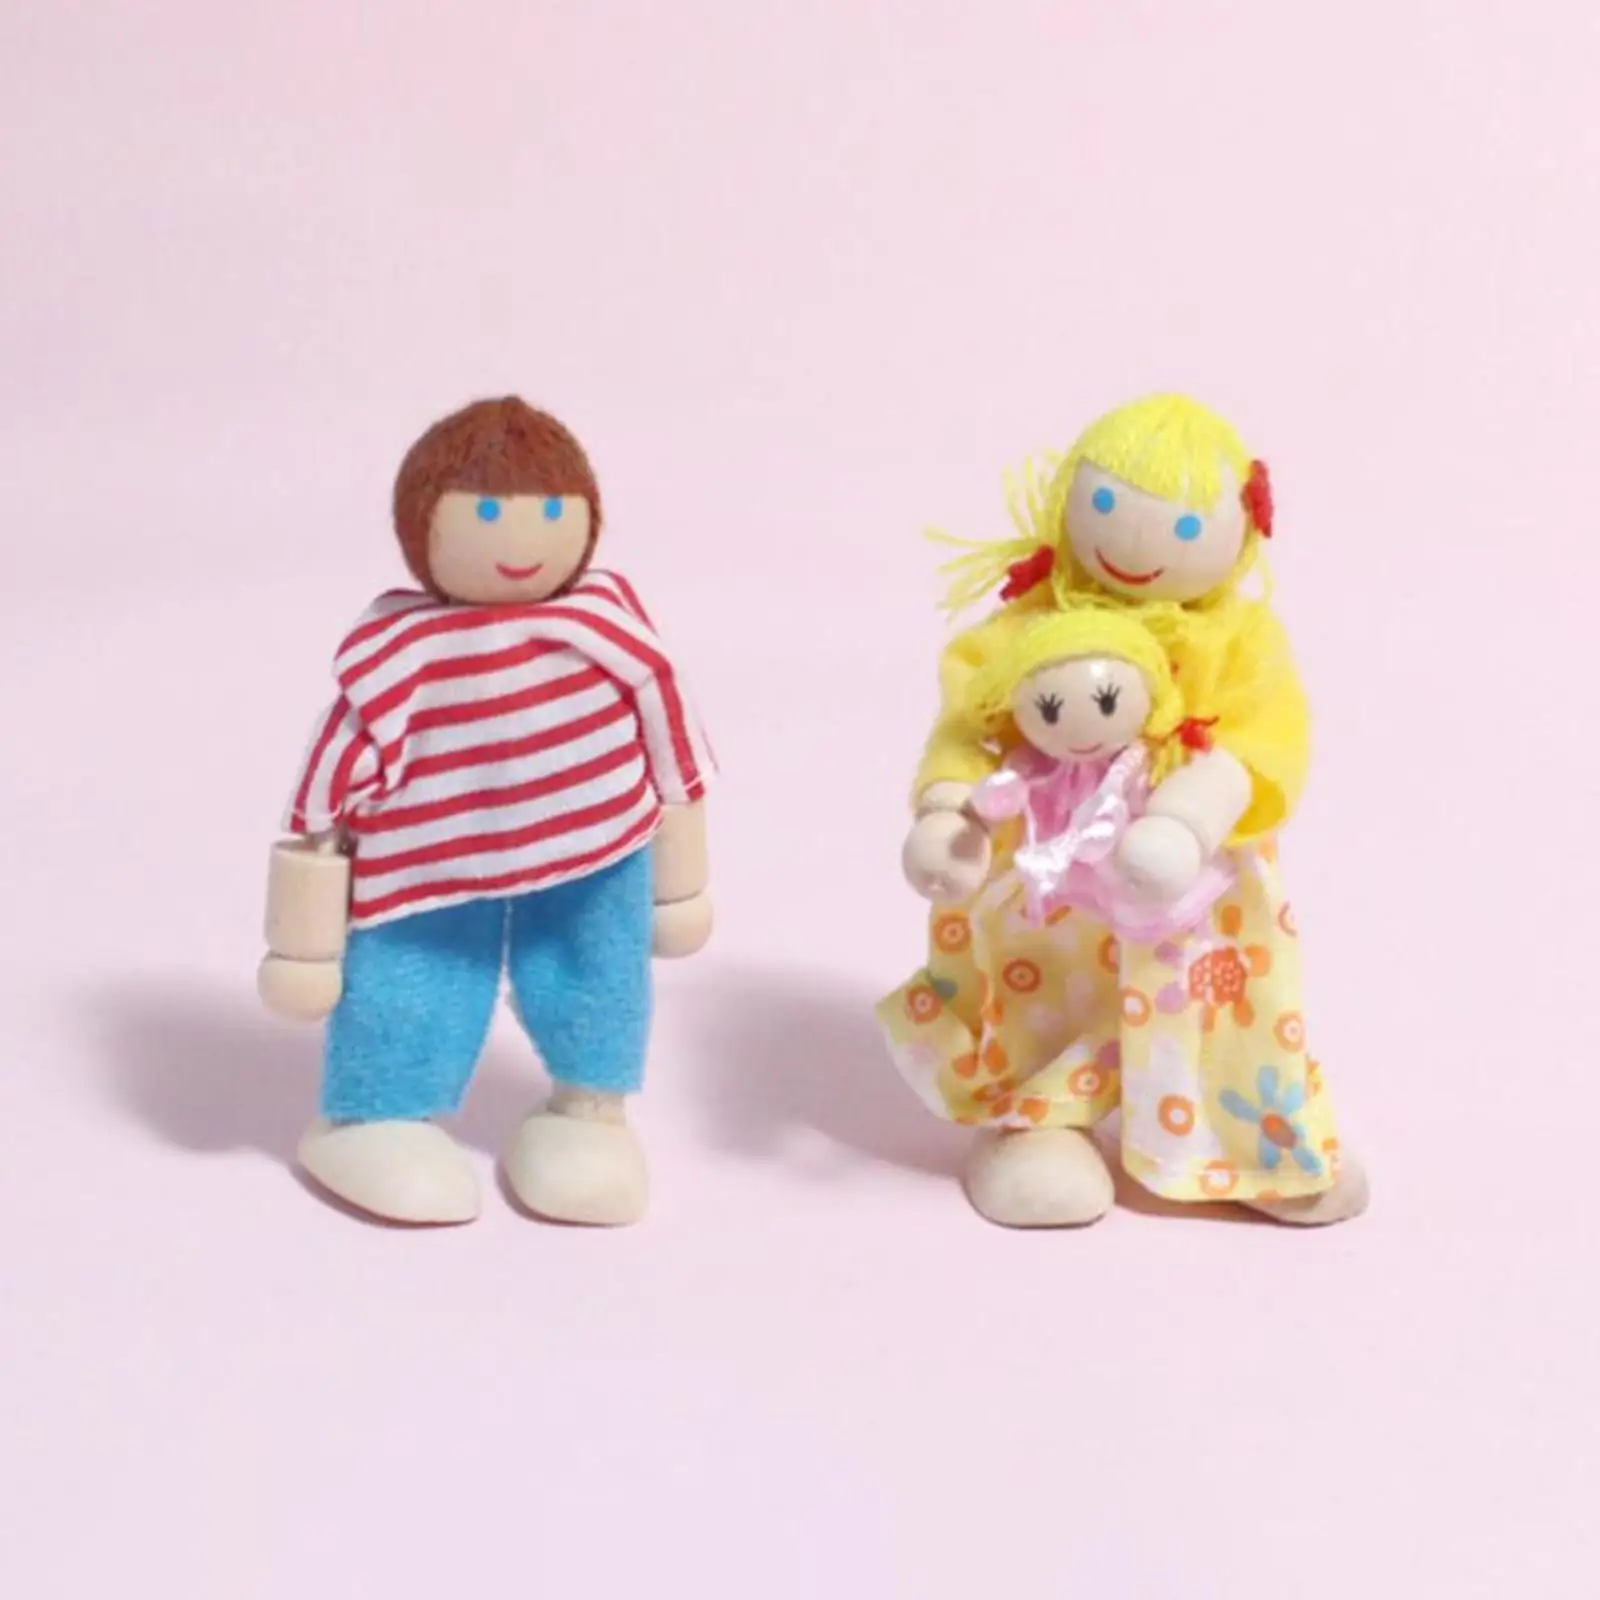 Dollhouse Family Set Dollhouse Dolls Pretend Play Figures, Miniature Doll House Doll Figures, Family Role Play